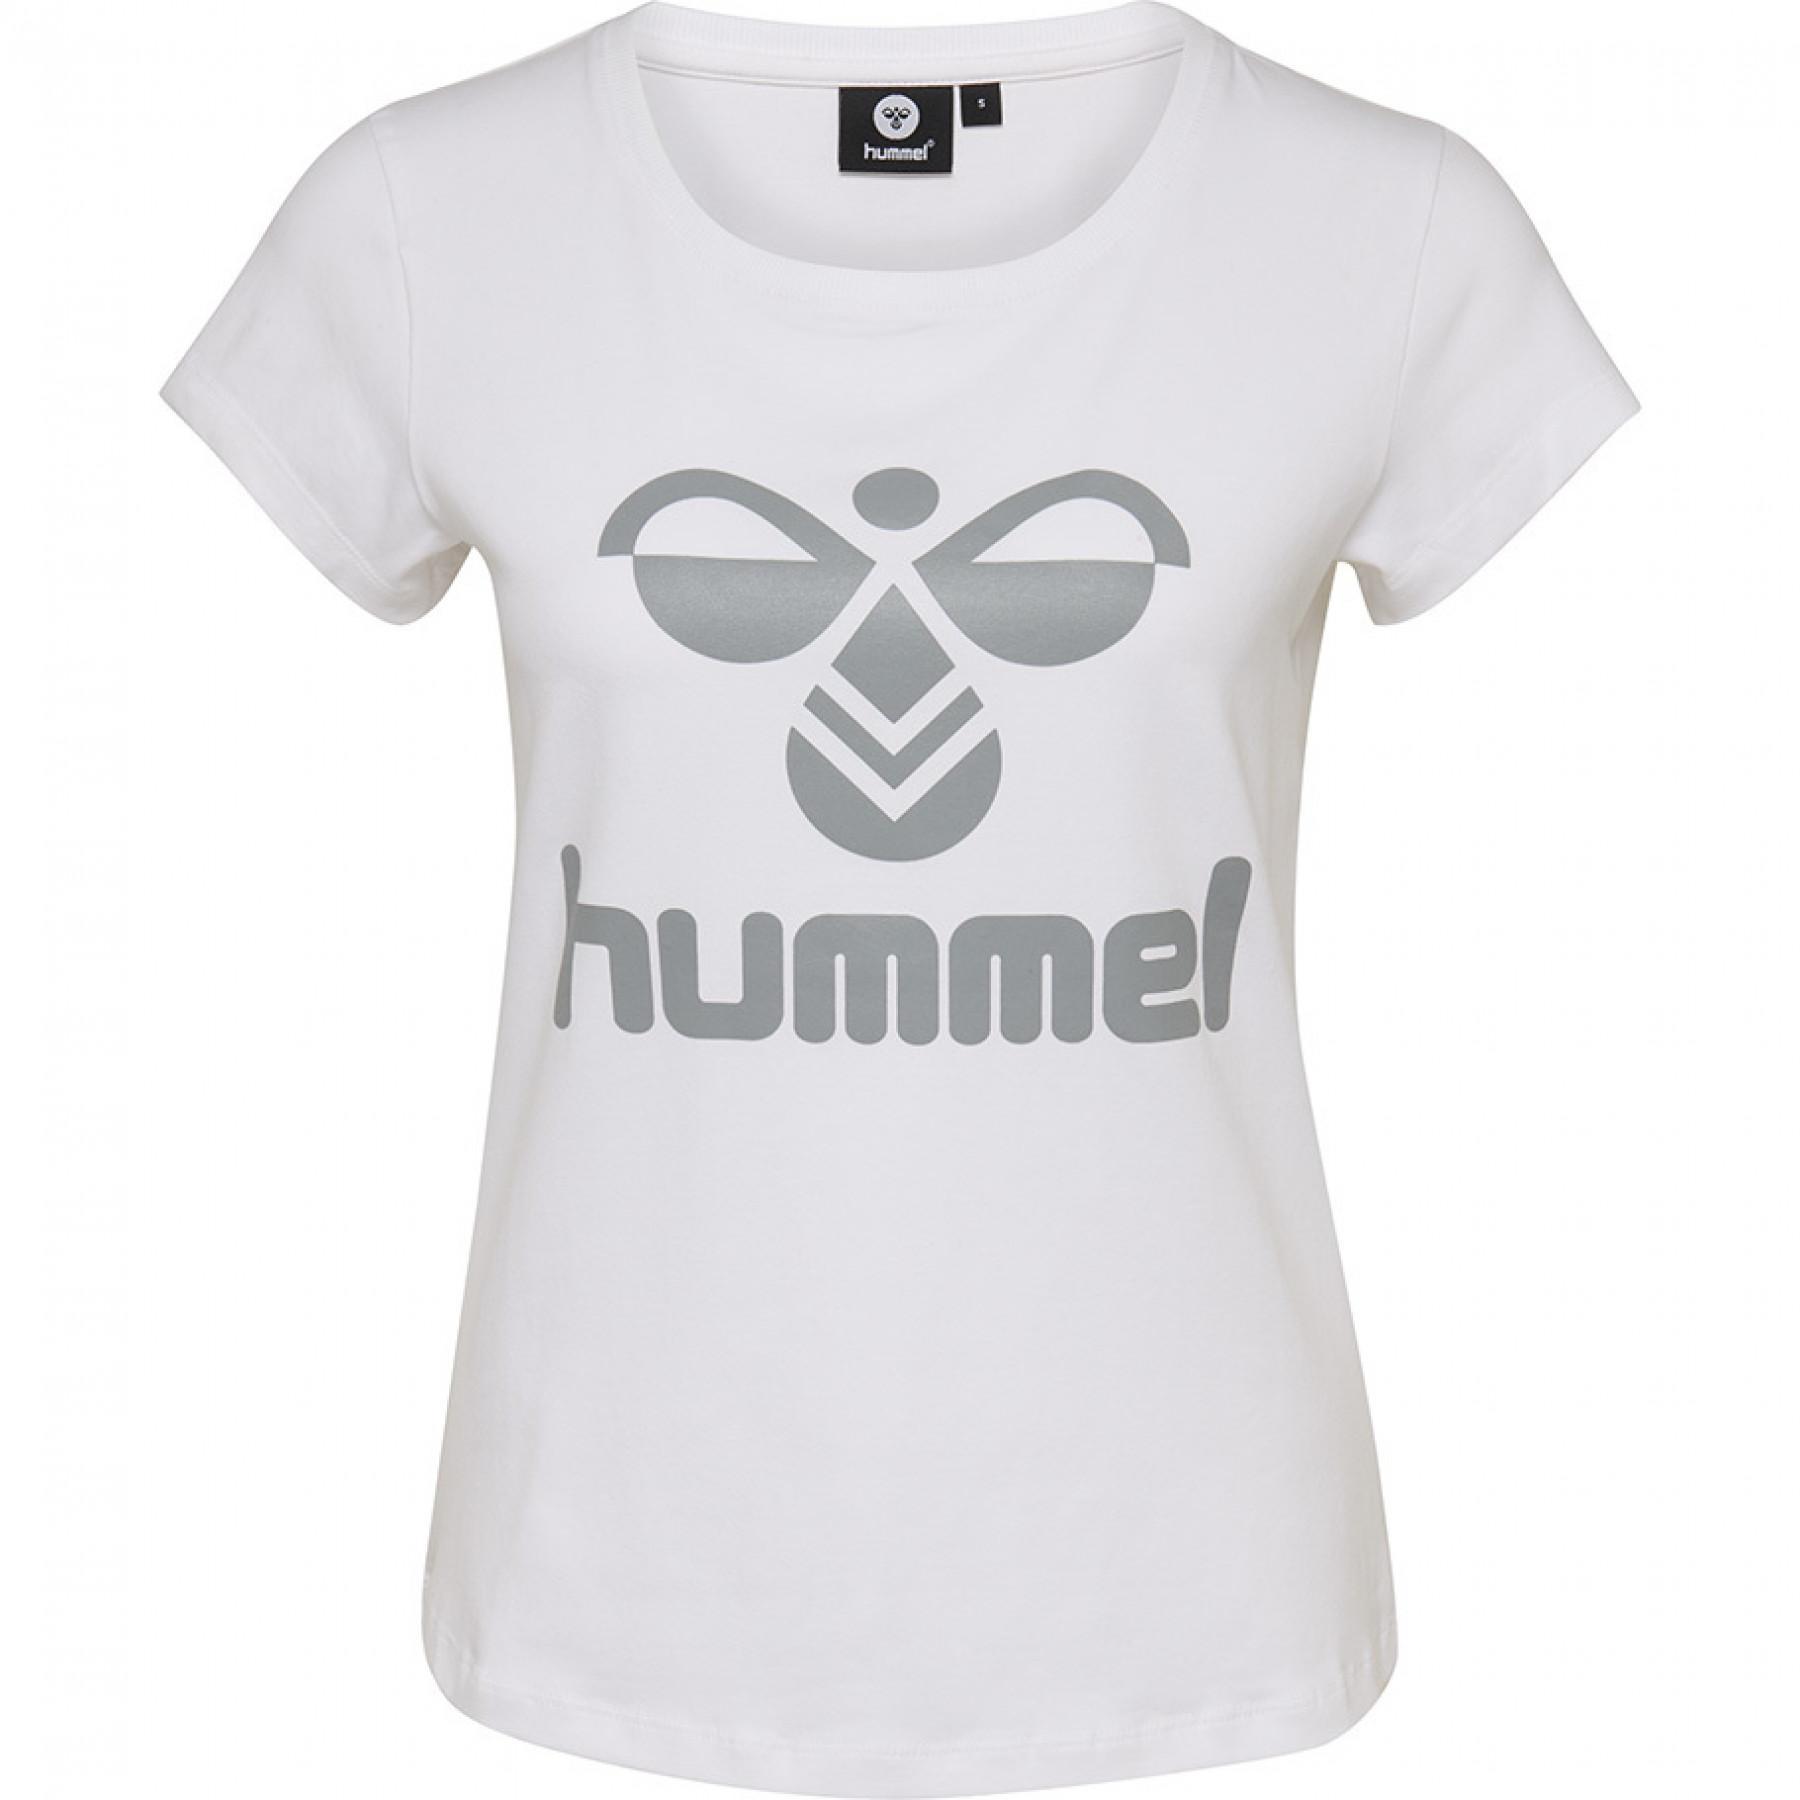 Women's T-shirt Hummel jane white grey